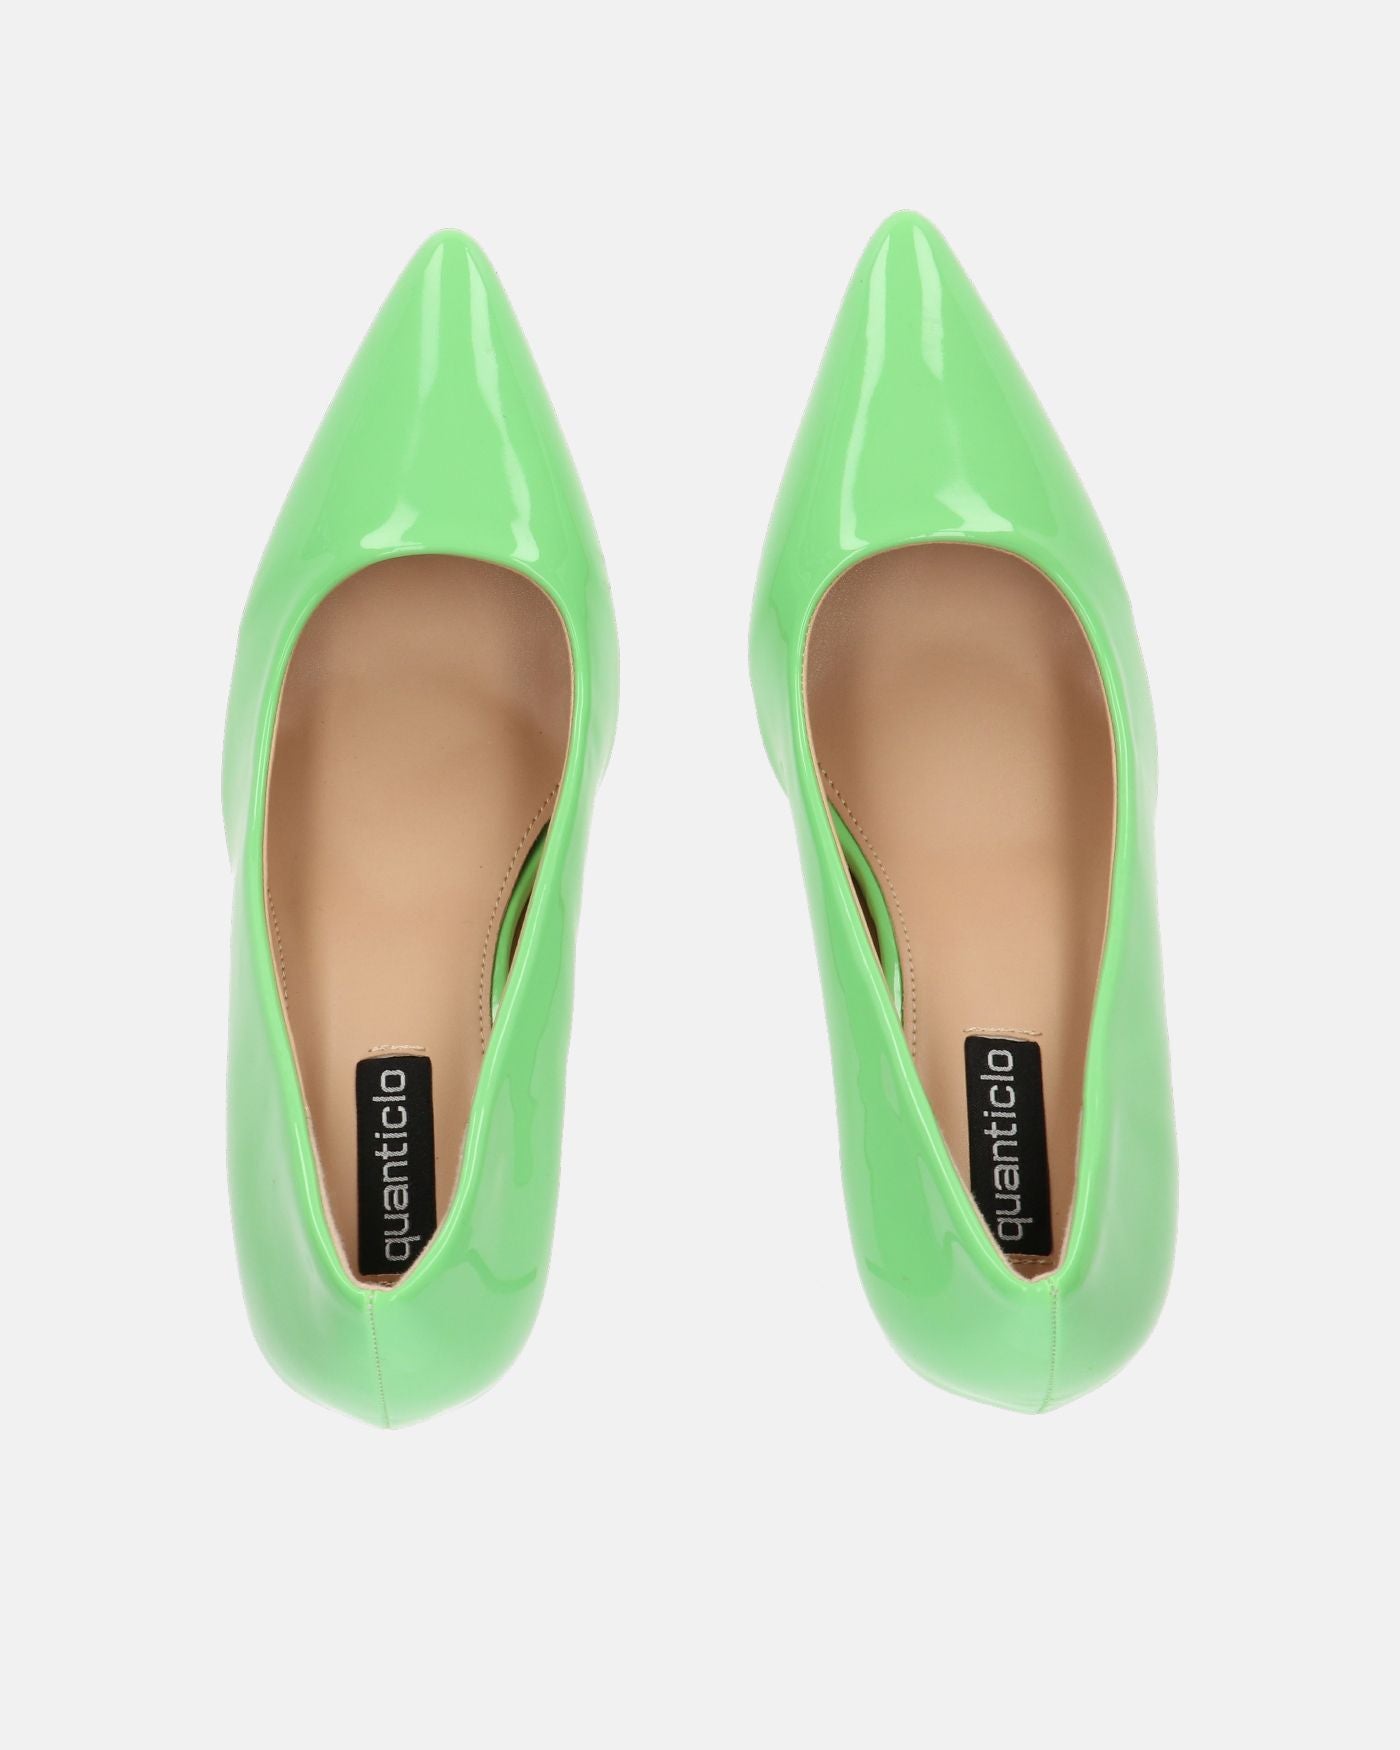 PORSHA - green glassy decolette with stiletto heel